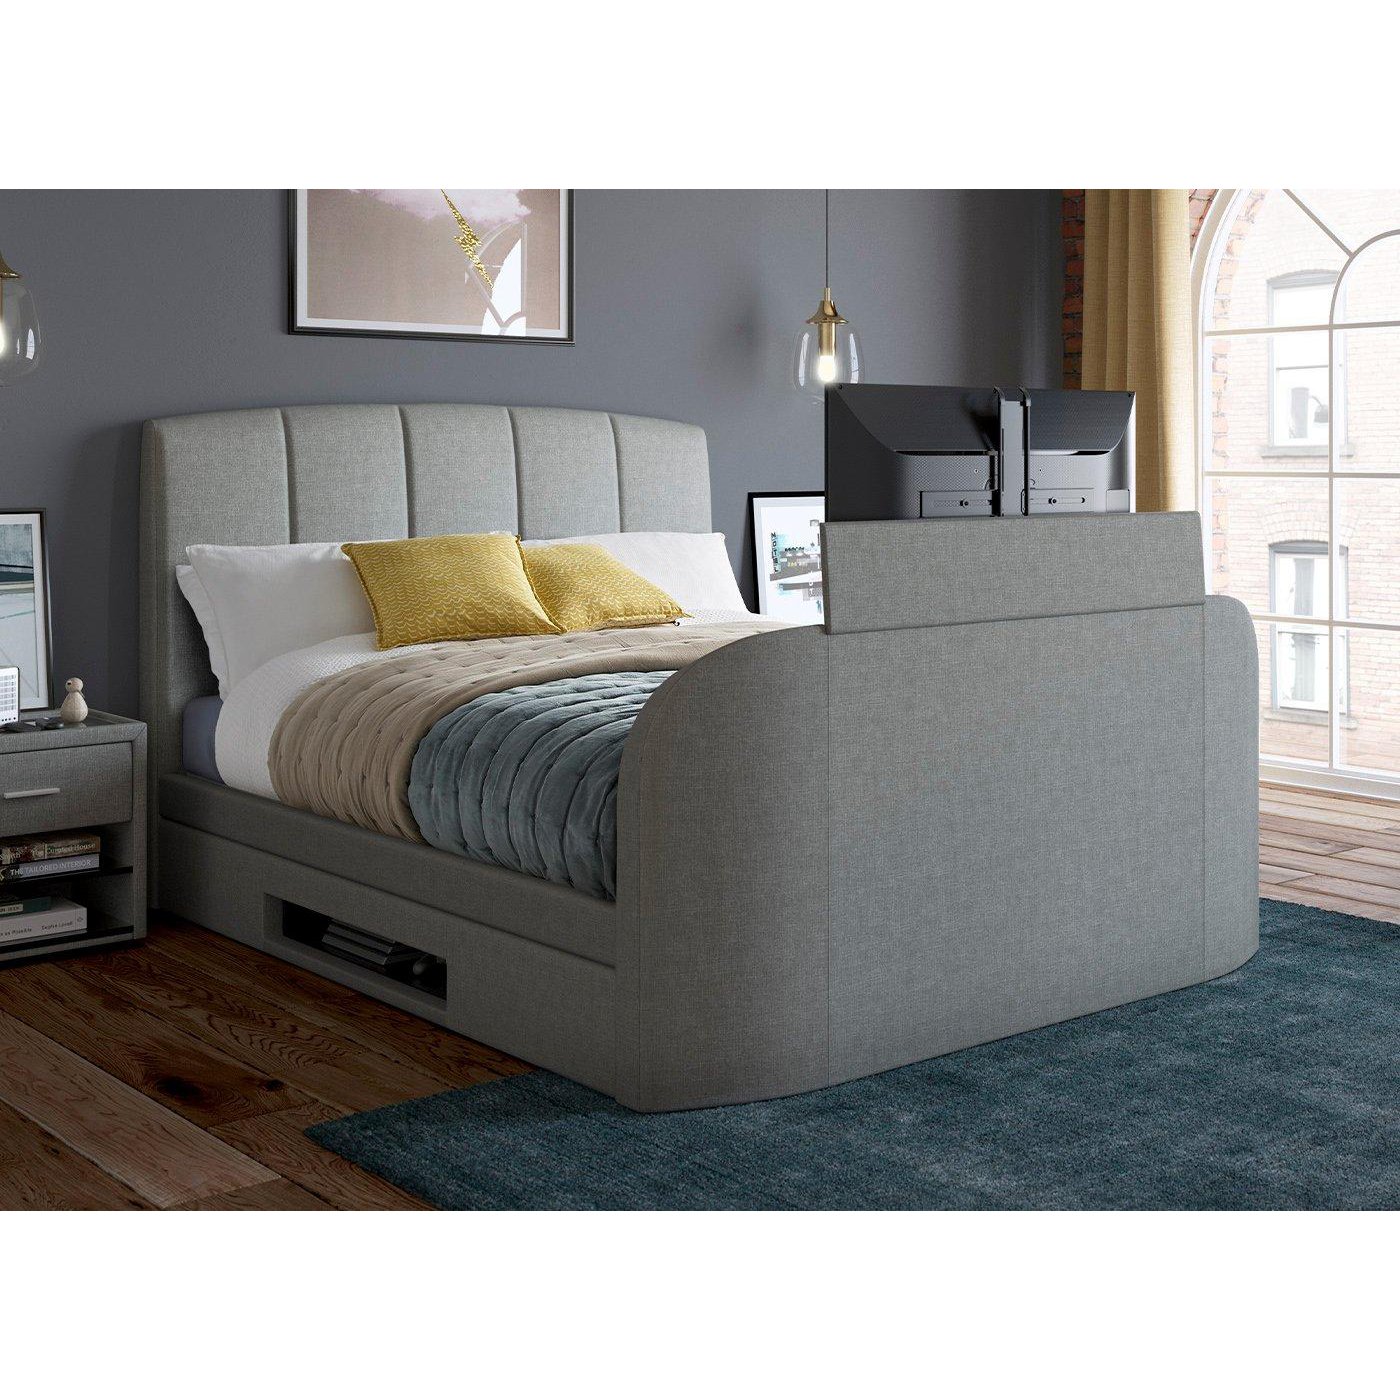 Seoul Upholstered Ottoman TV Bed Frame - 5'0 King - Grey